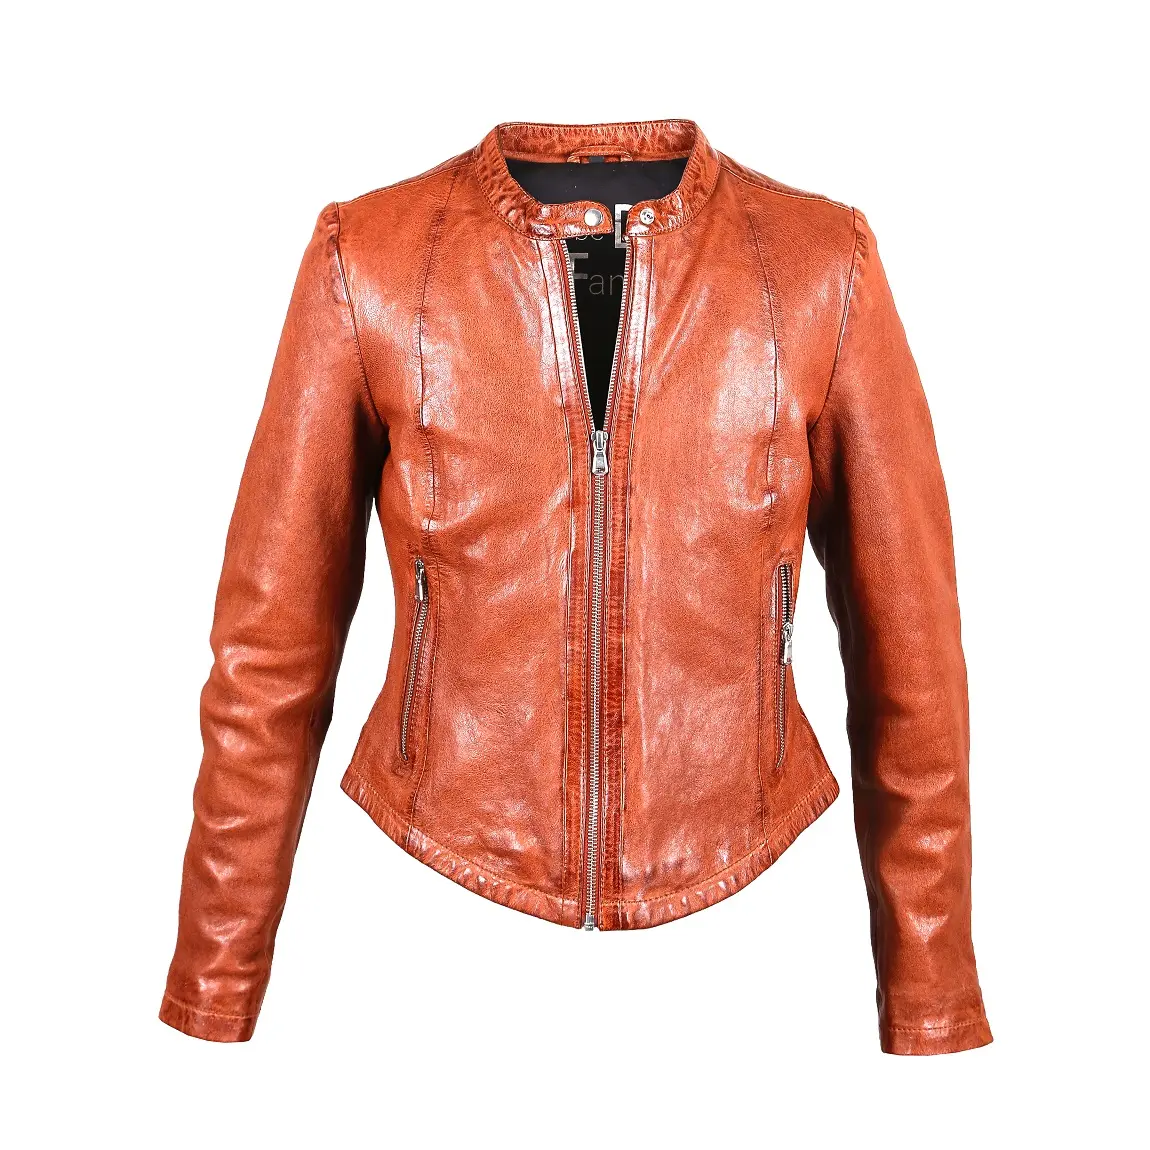 Elegant road runner tan colored women genuine leather jacket outdoor bomba zipper collarless ladies jackets